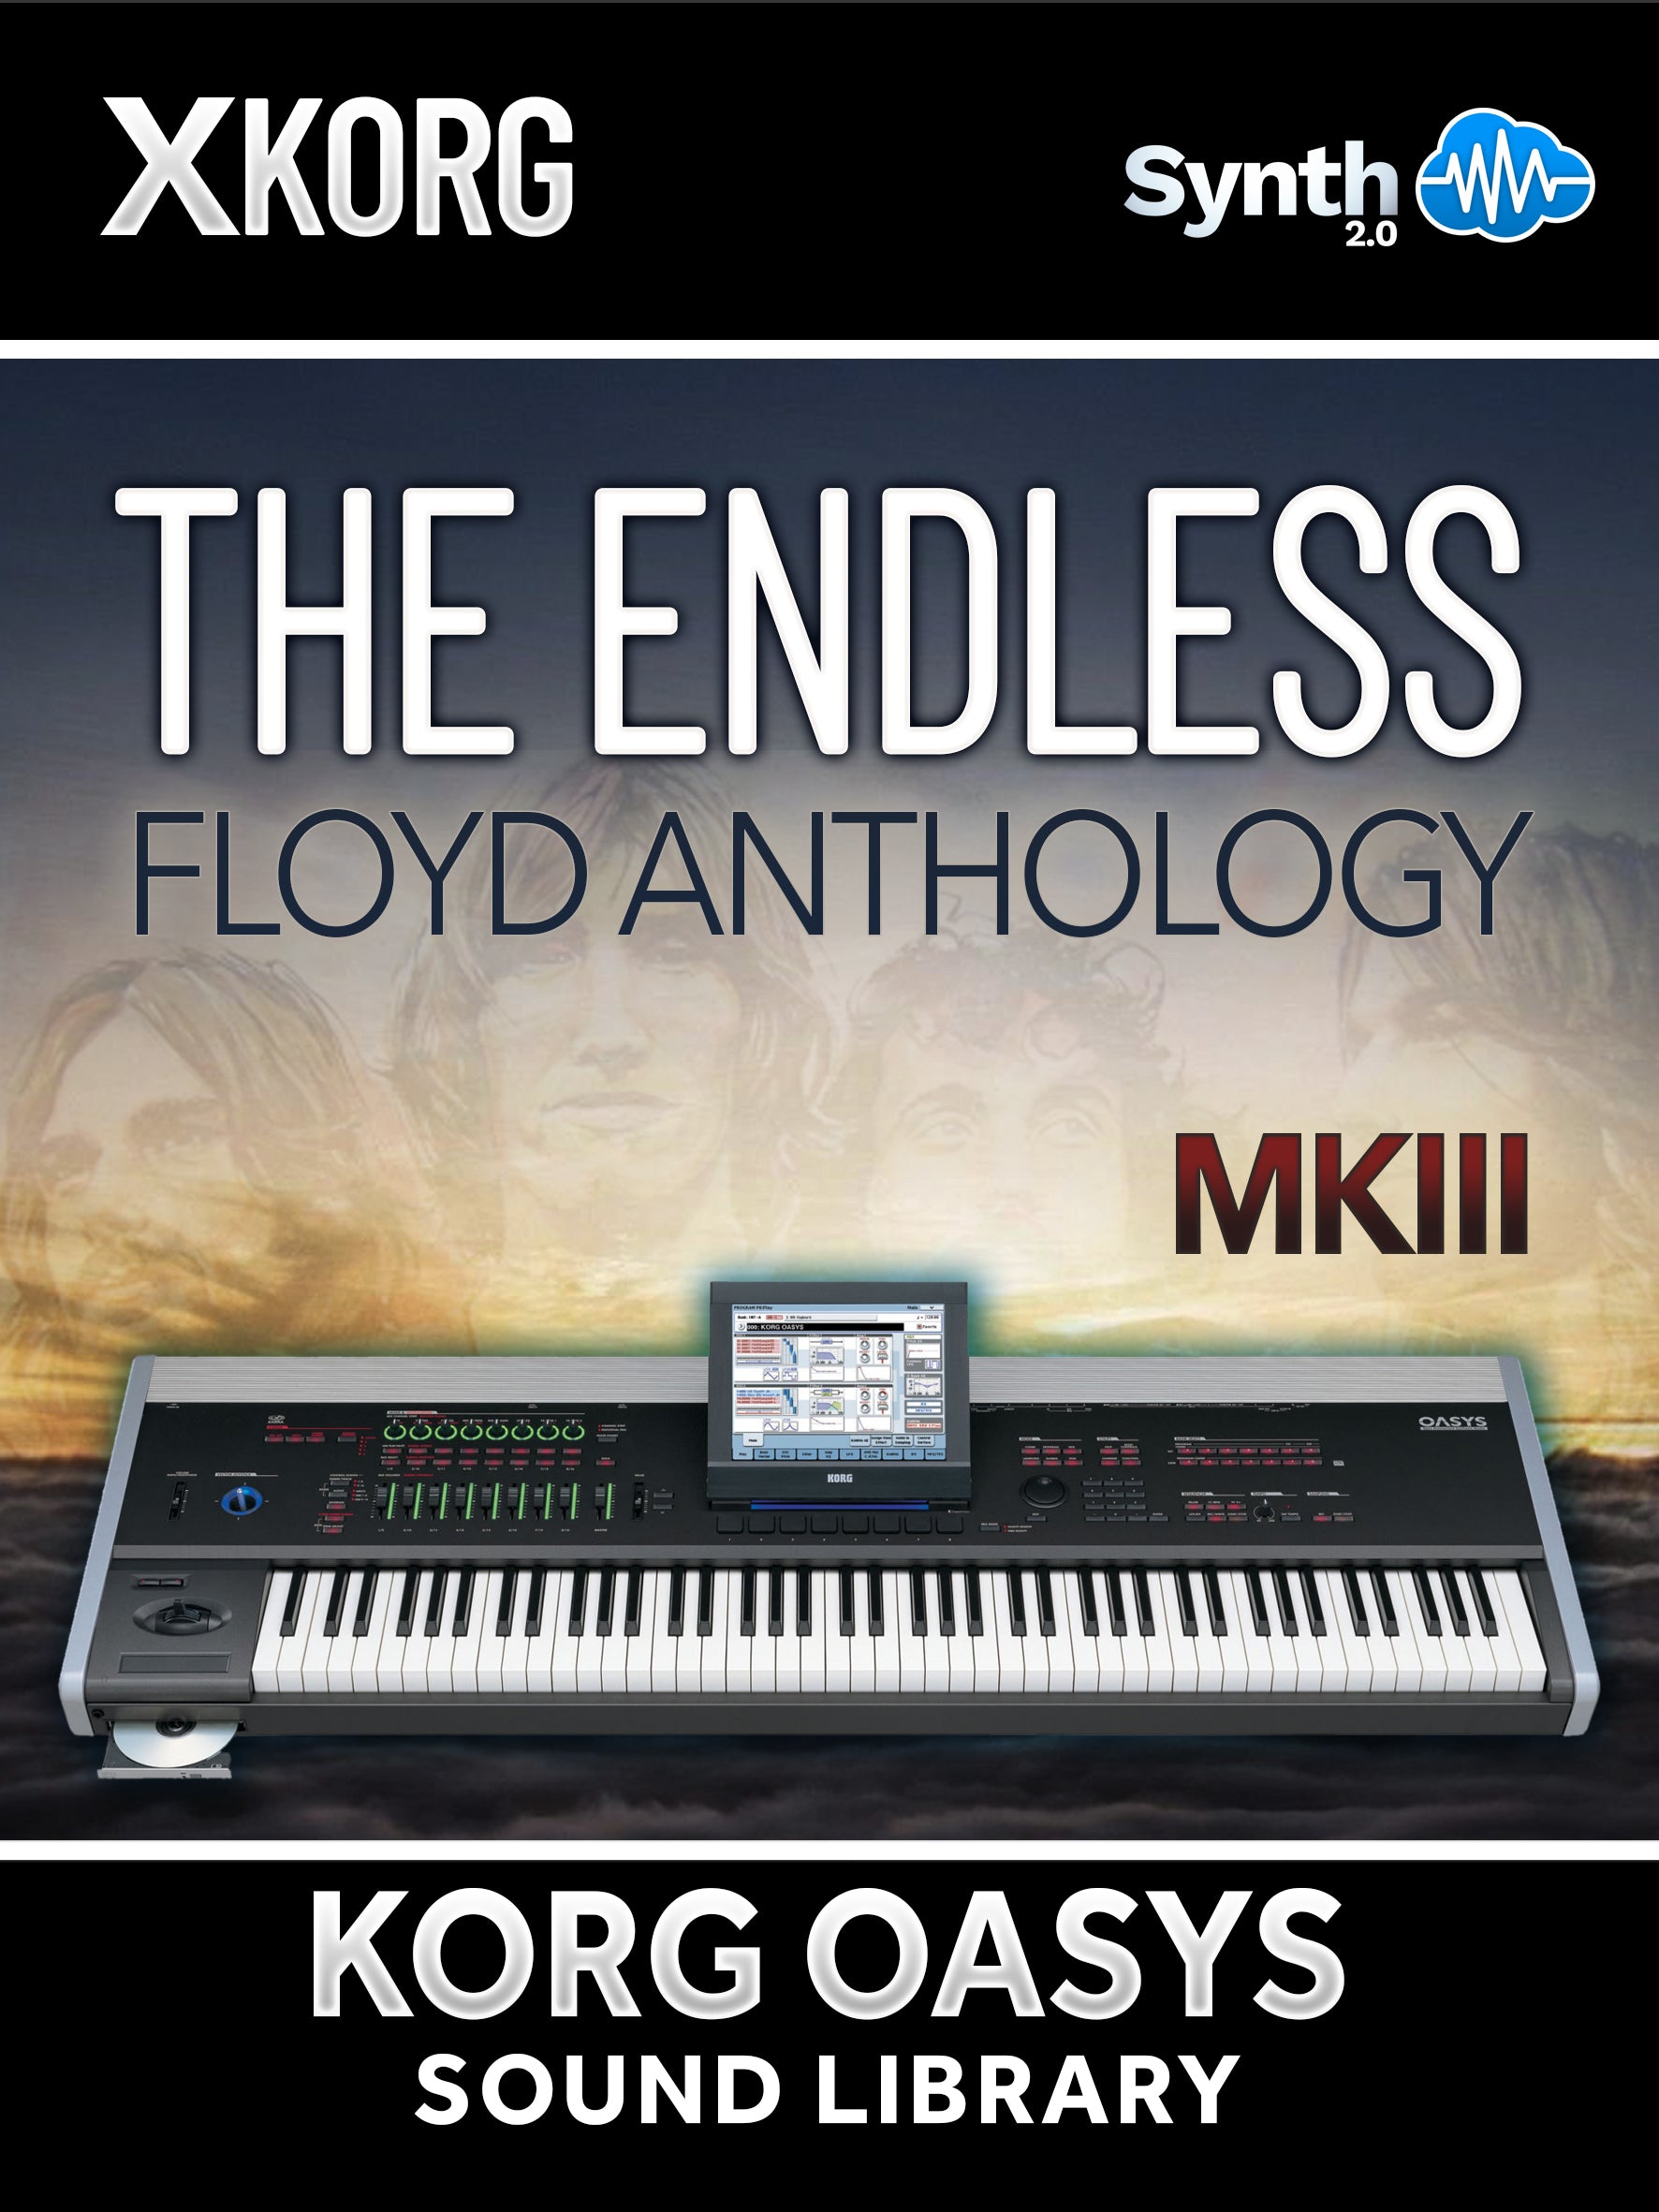 SSX008 - The Endless Floyd Anthology MKI - Korg Oasys ( 63 presets )